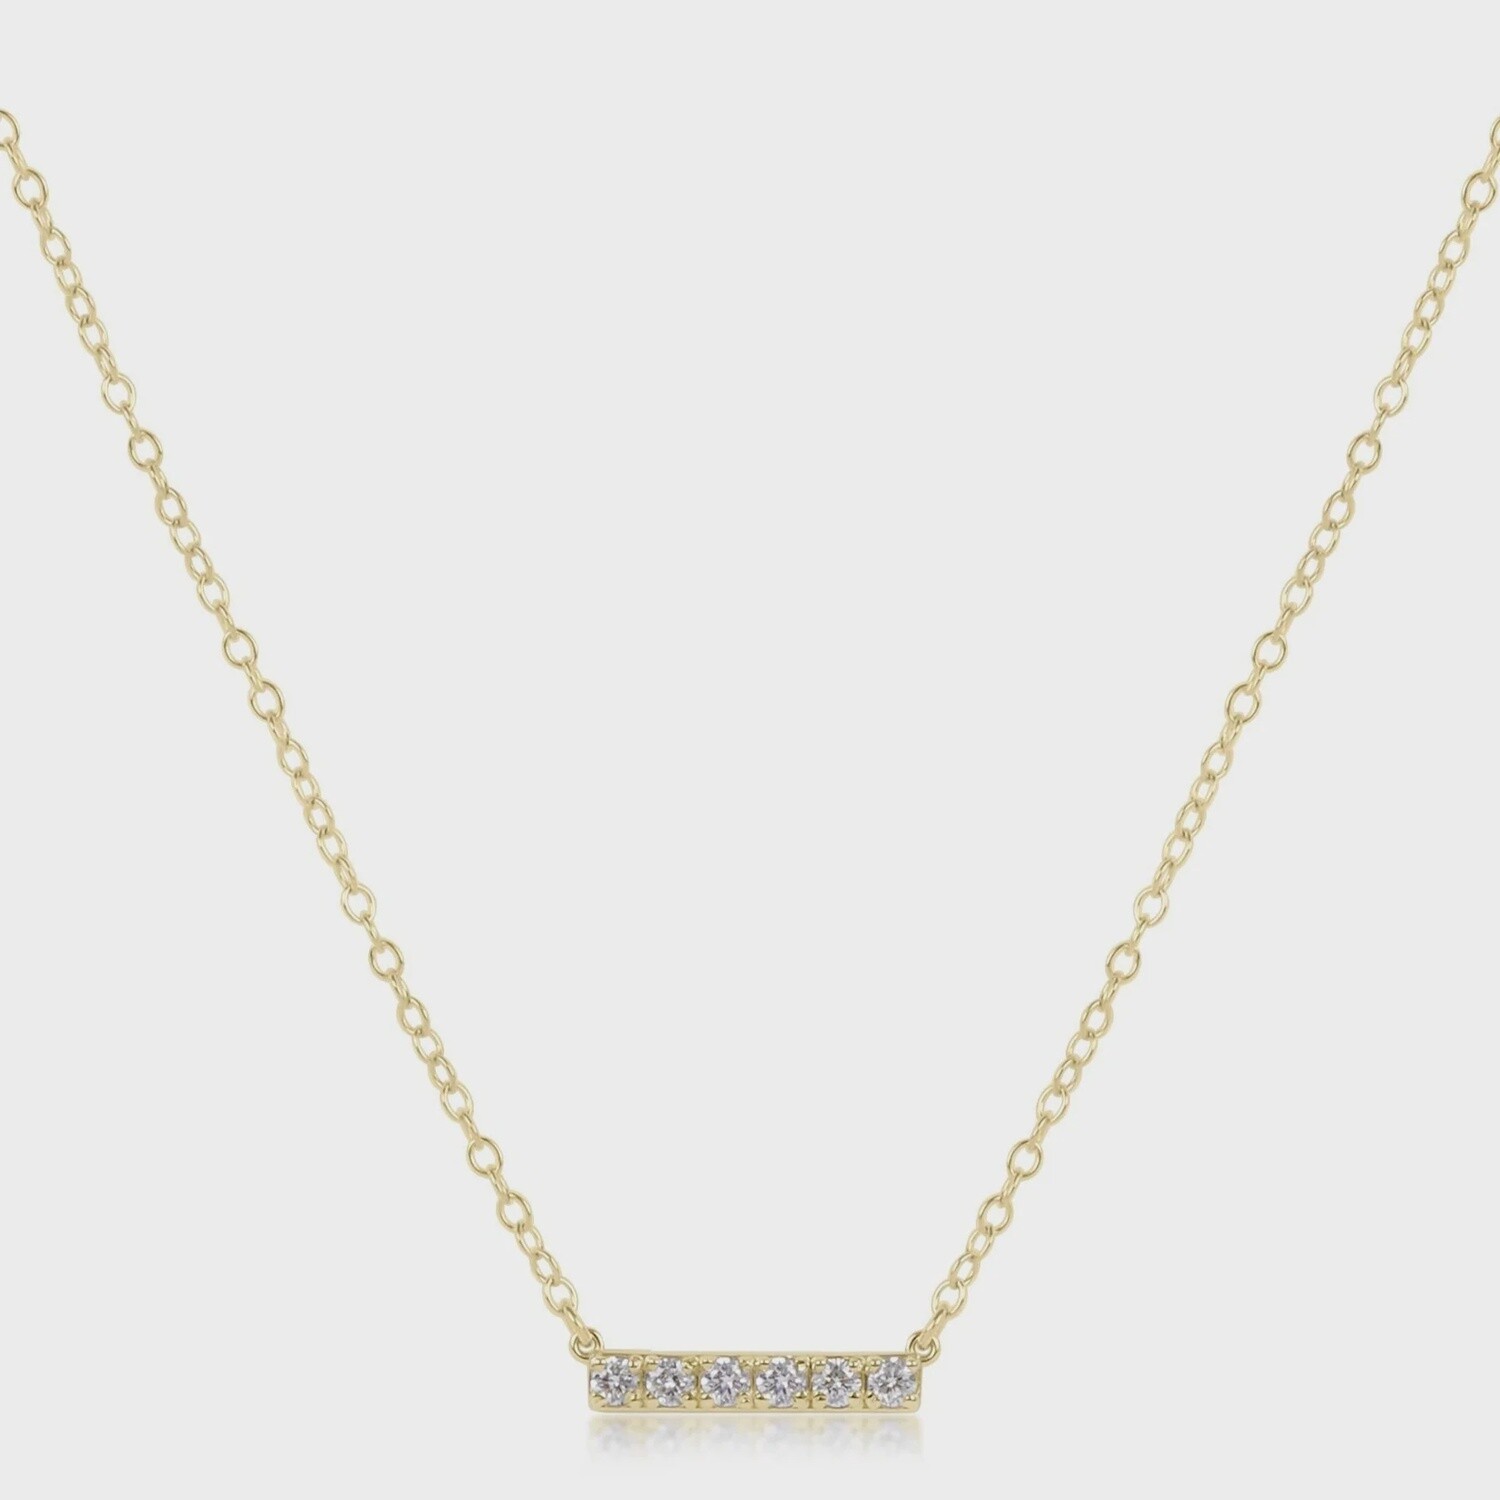 14k Gold/Diamond Bar Necklace